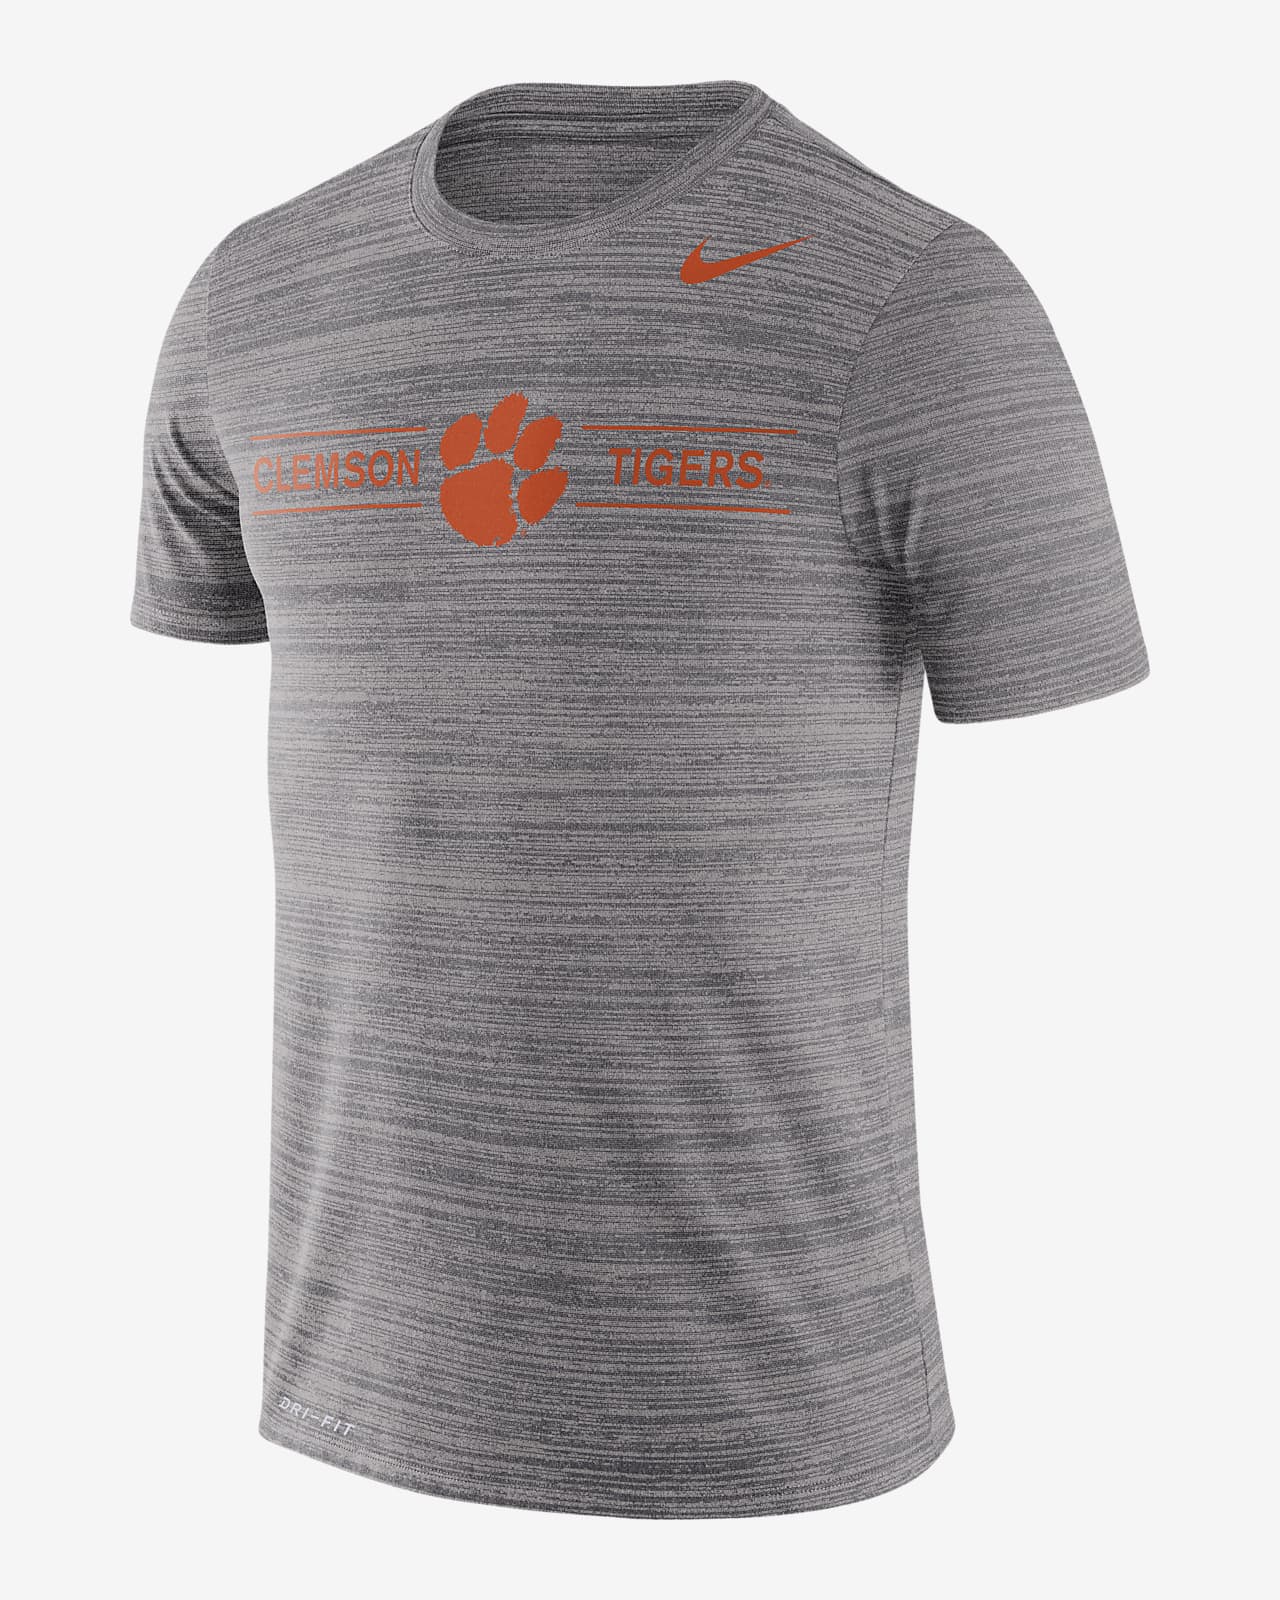 Wiskundige apotheek ik ontbijt Nike College Dri-FIT Velocity (Clemson) Men's T-Shirt. Nike.com